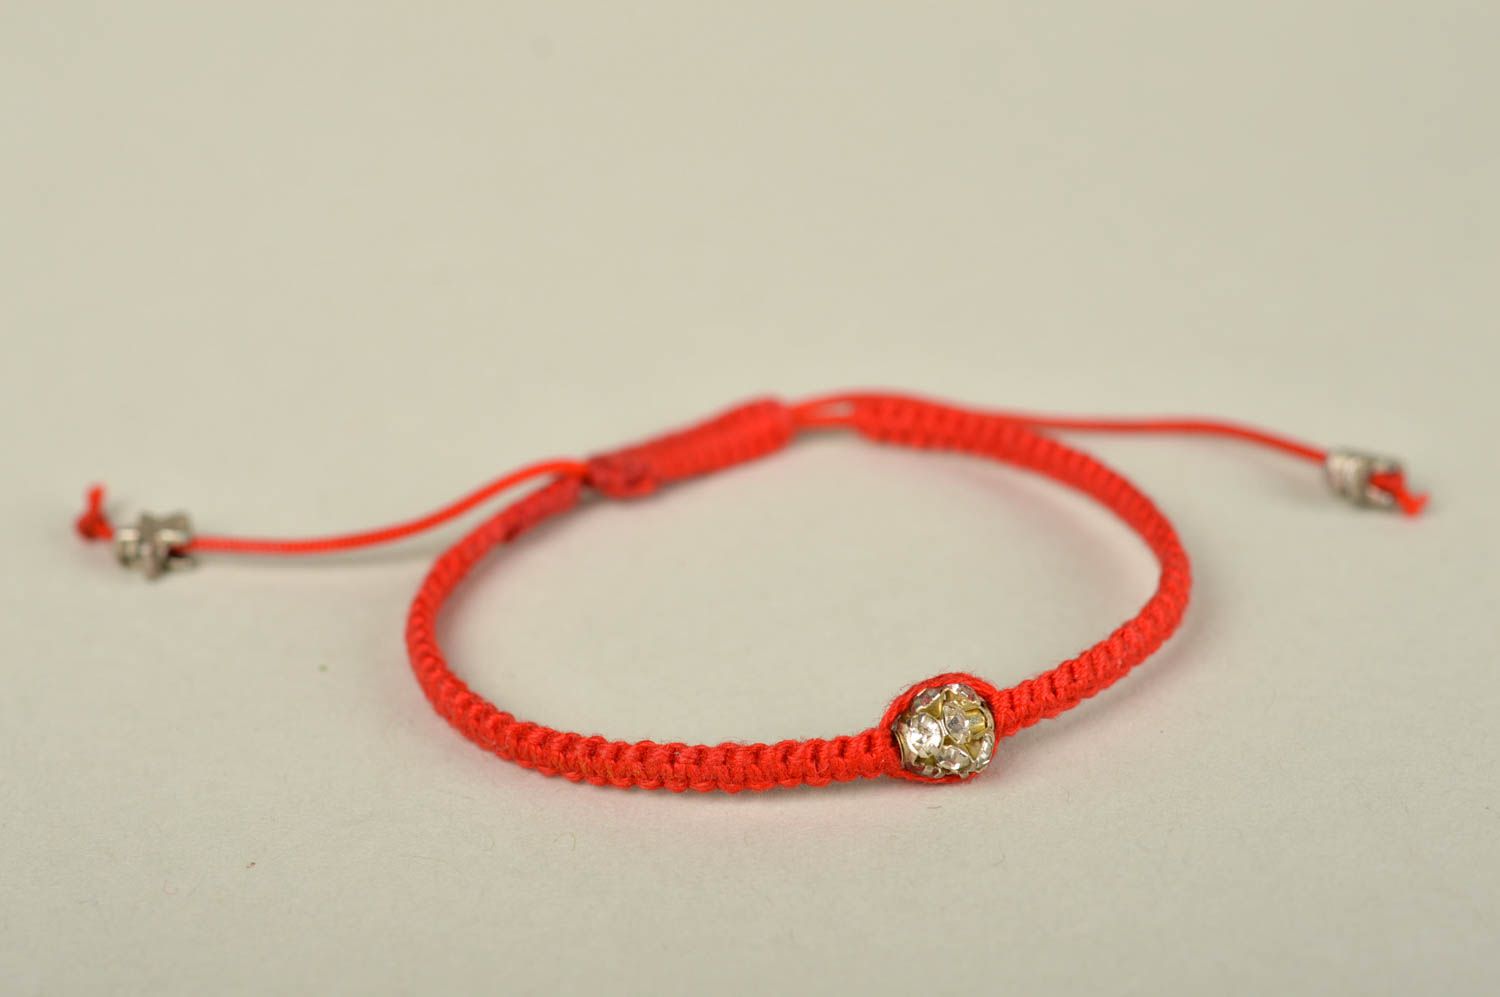 Handmade red wrist bracelet textile designer bracelet cute stylish jewelry photo 2